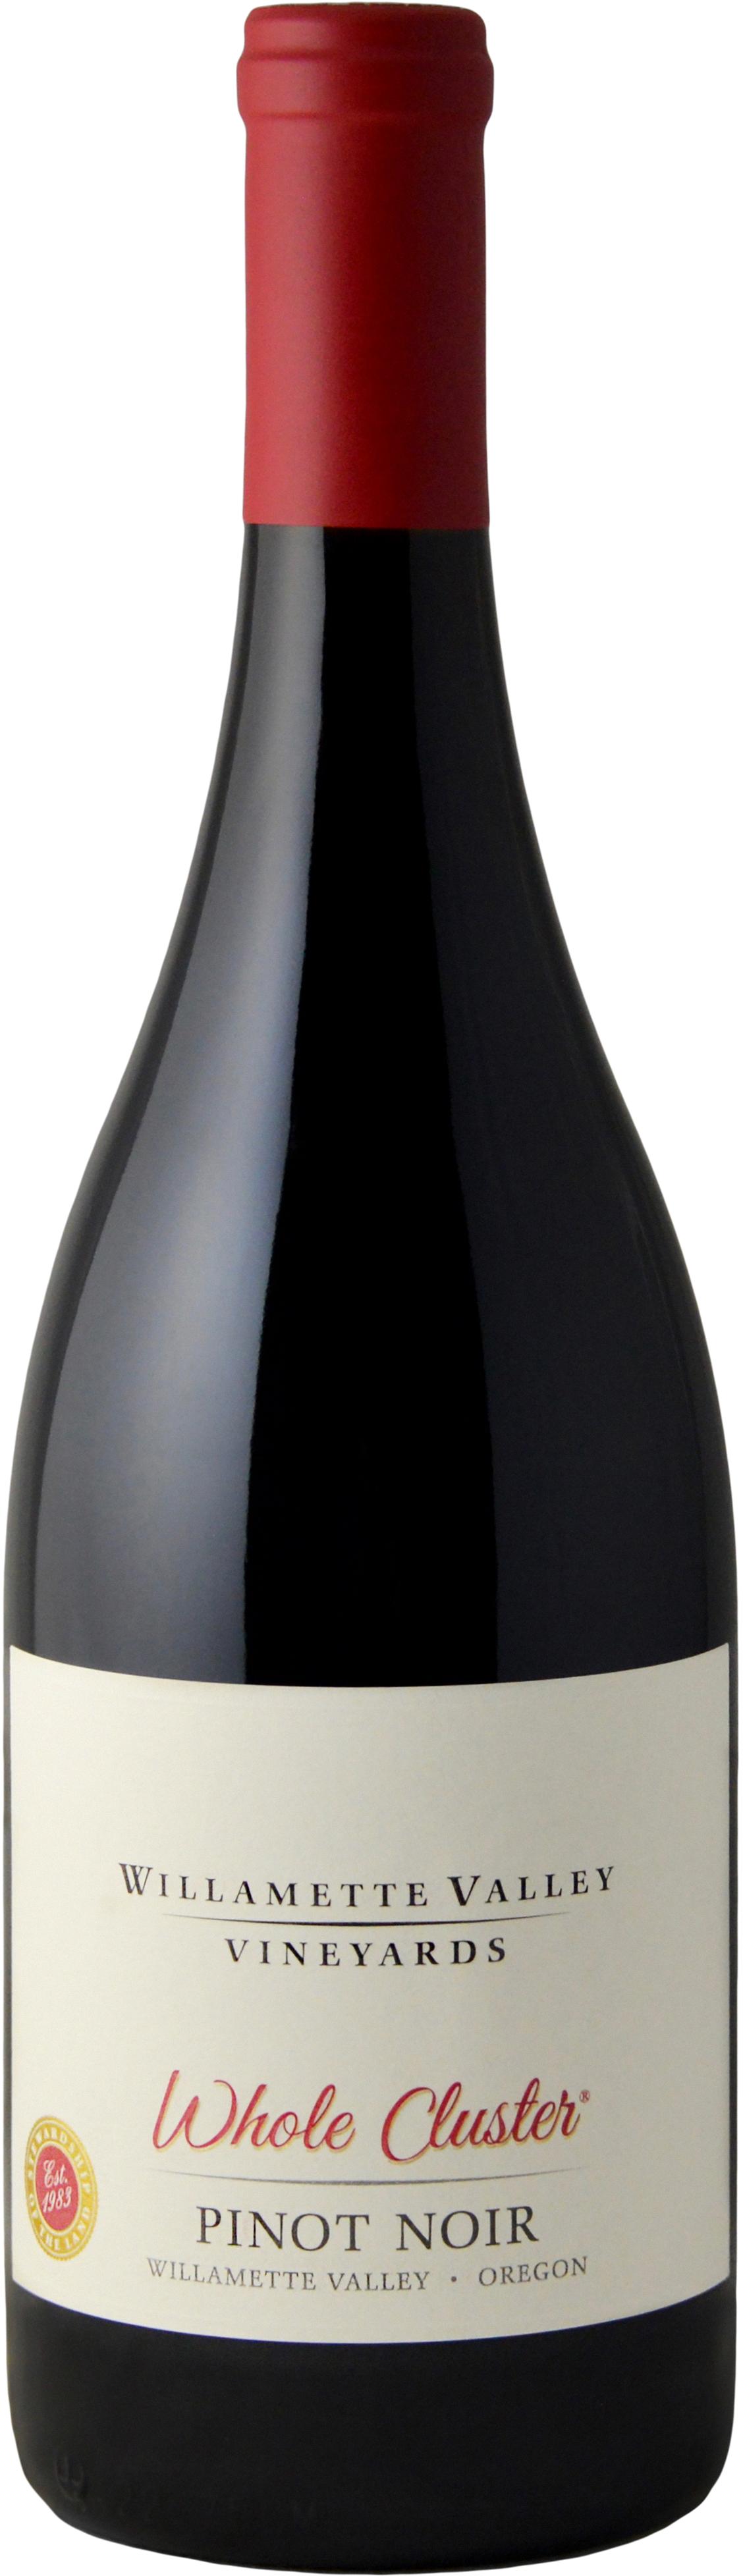 willamette valley vineyards barrel select pinot noir 2019